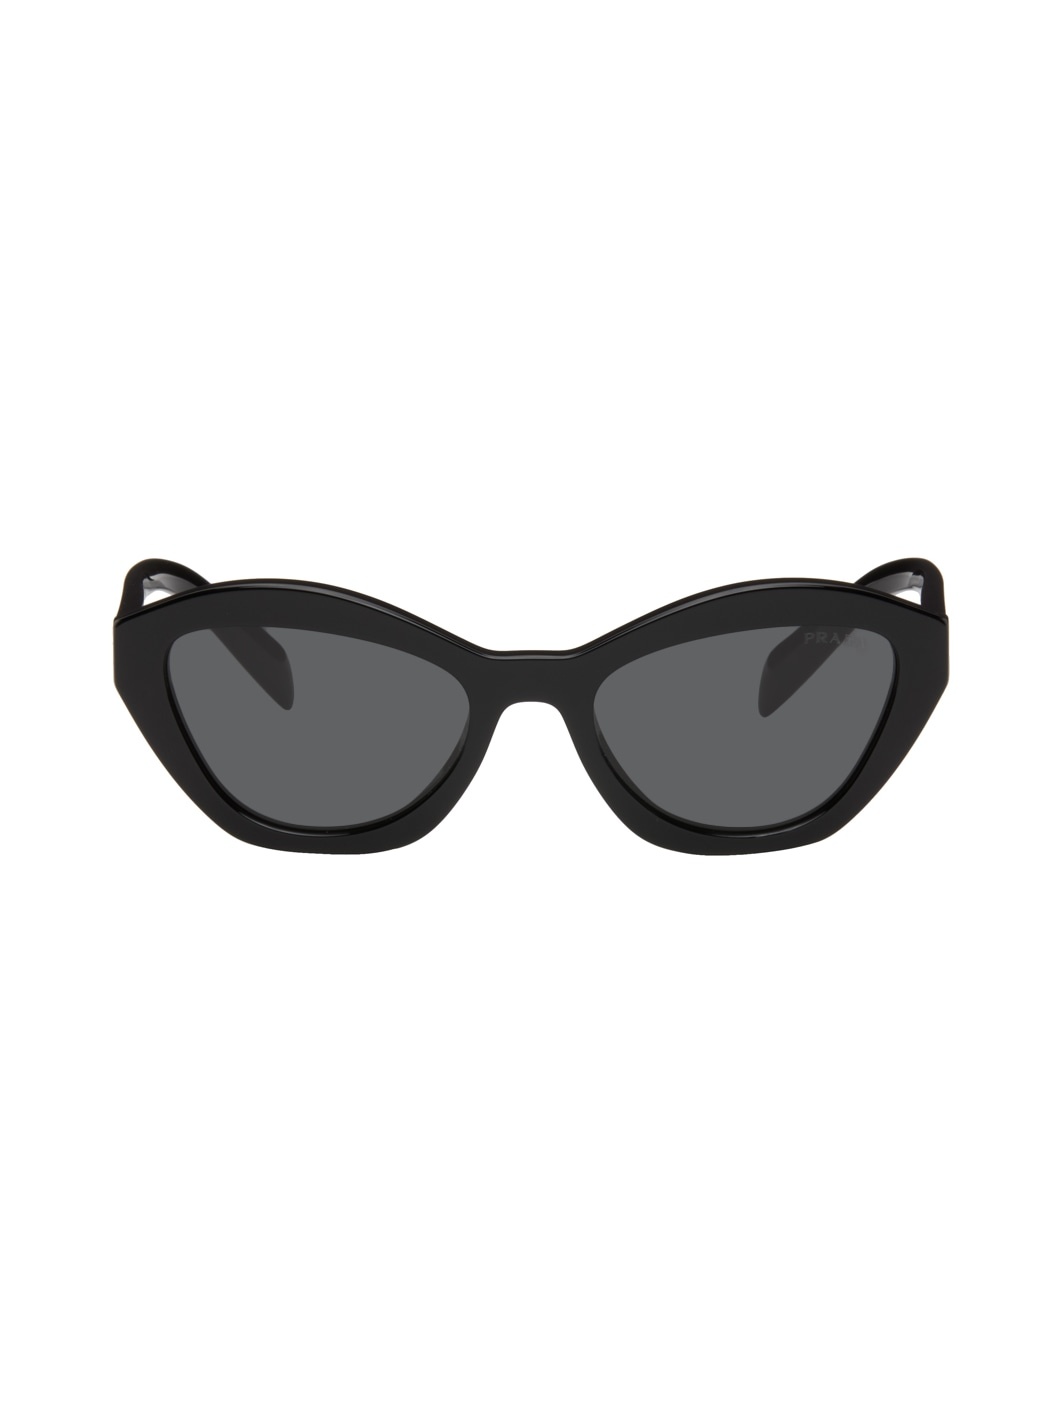 Black Cat-Eye Sunglasses - 1